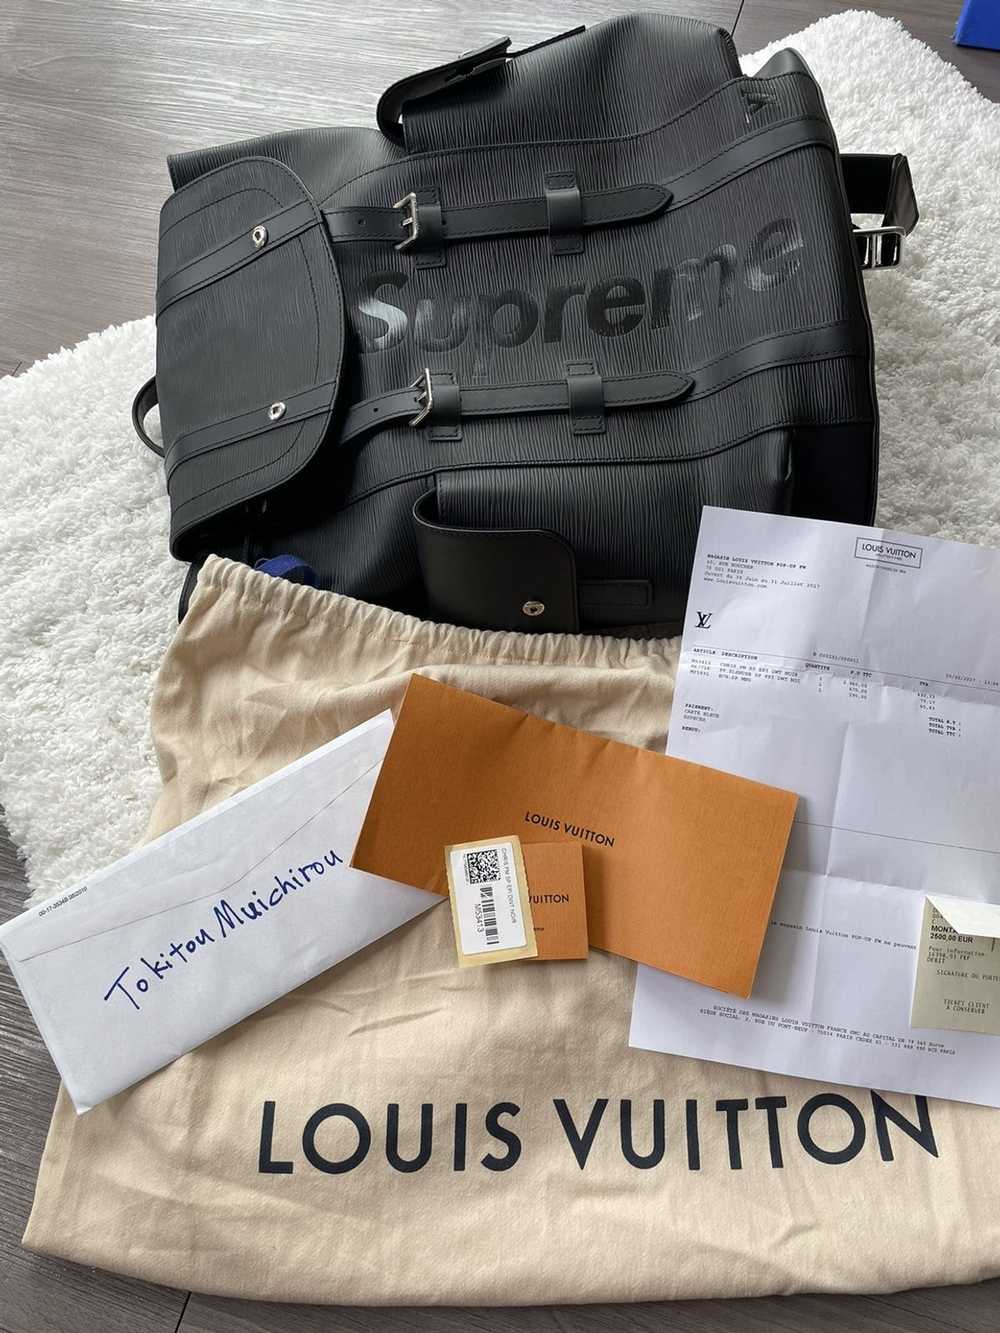 Supreme x Louis Vuitton 聯乘連帽衫最高已炒至$25,000 美元